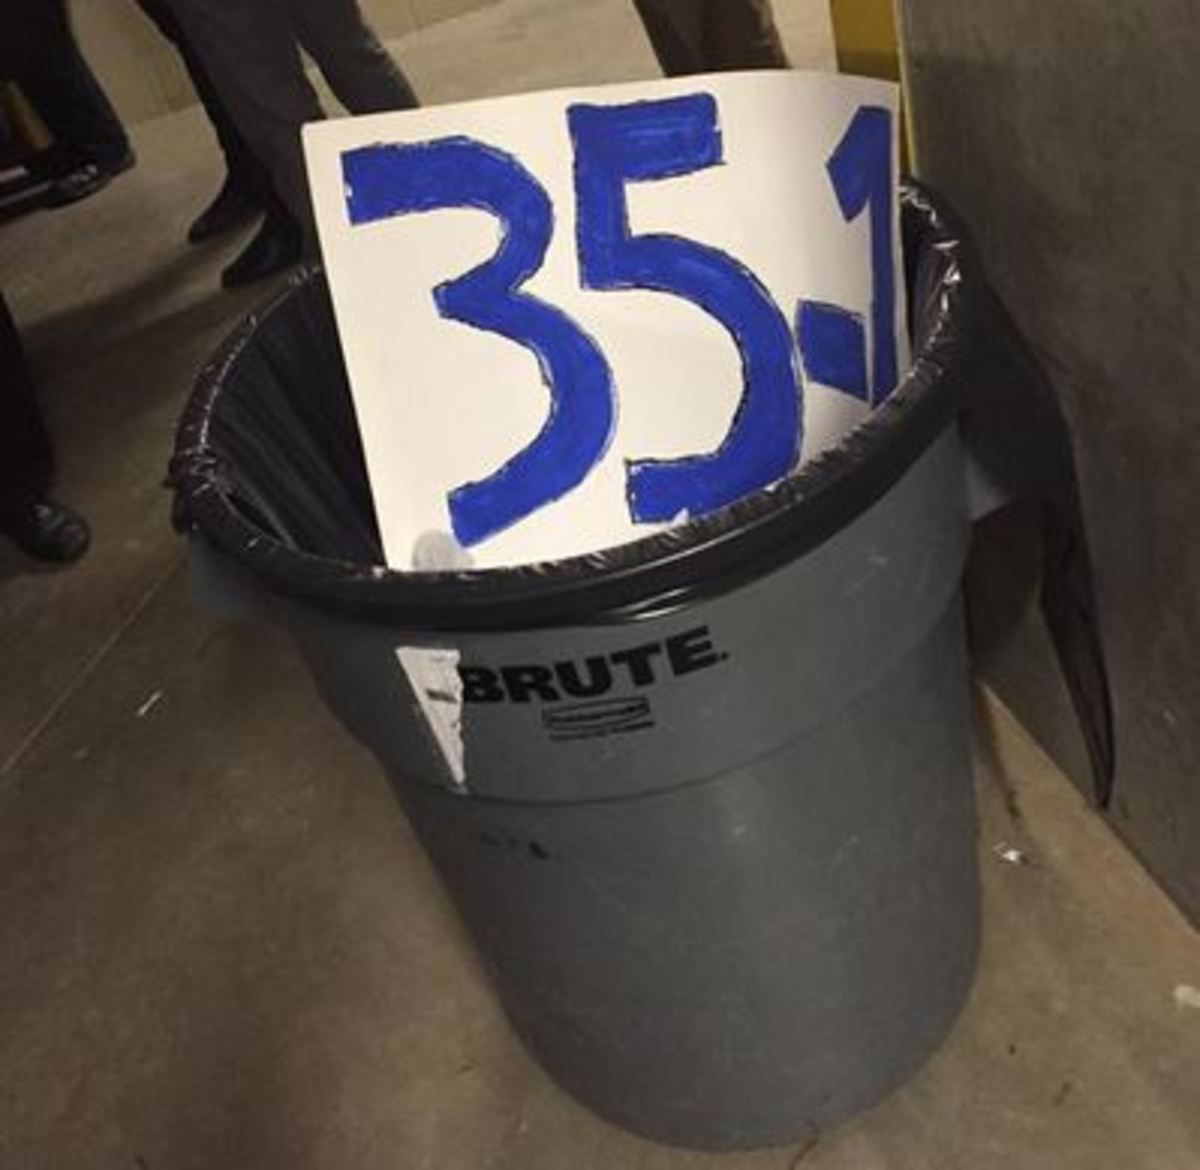 Cincinnati band member's 35-1 sign is thrown in trash.